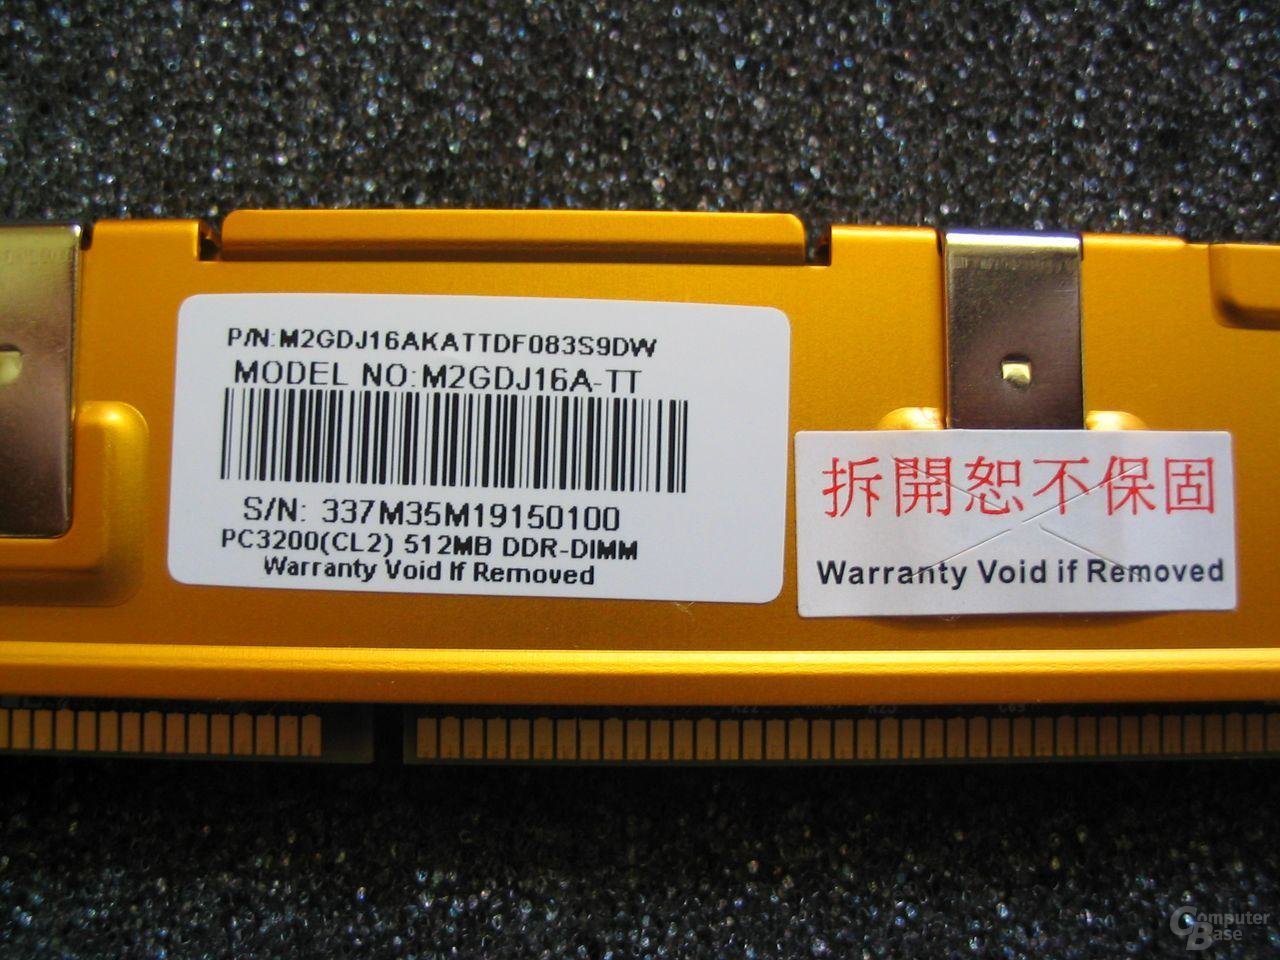 TwinMOS TwiSTER PC3200 (CL2) 512MB